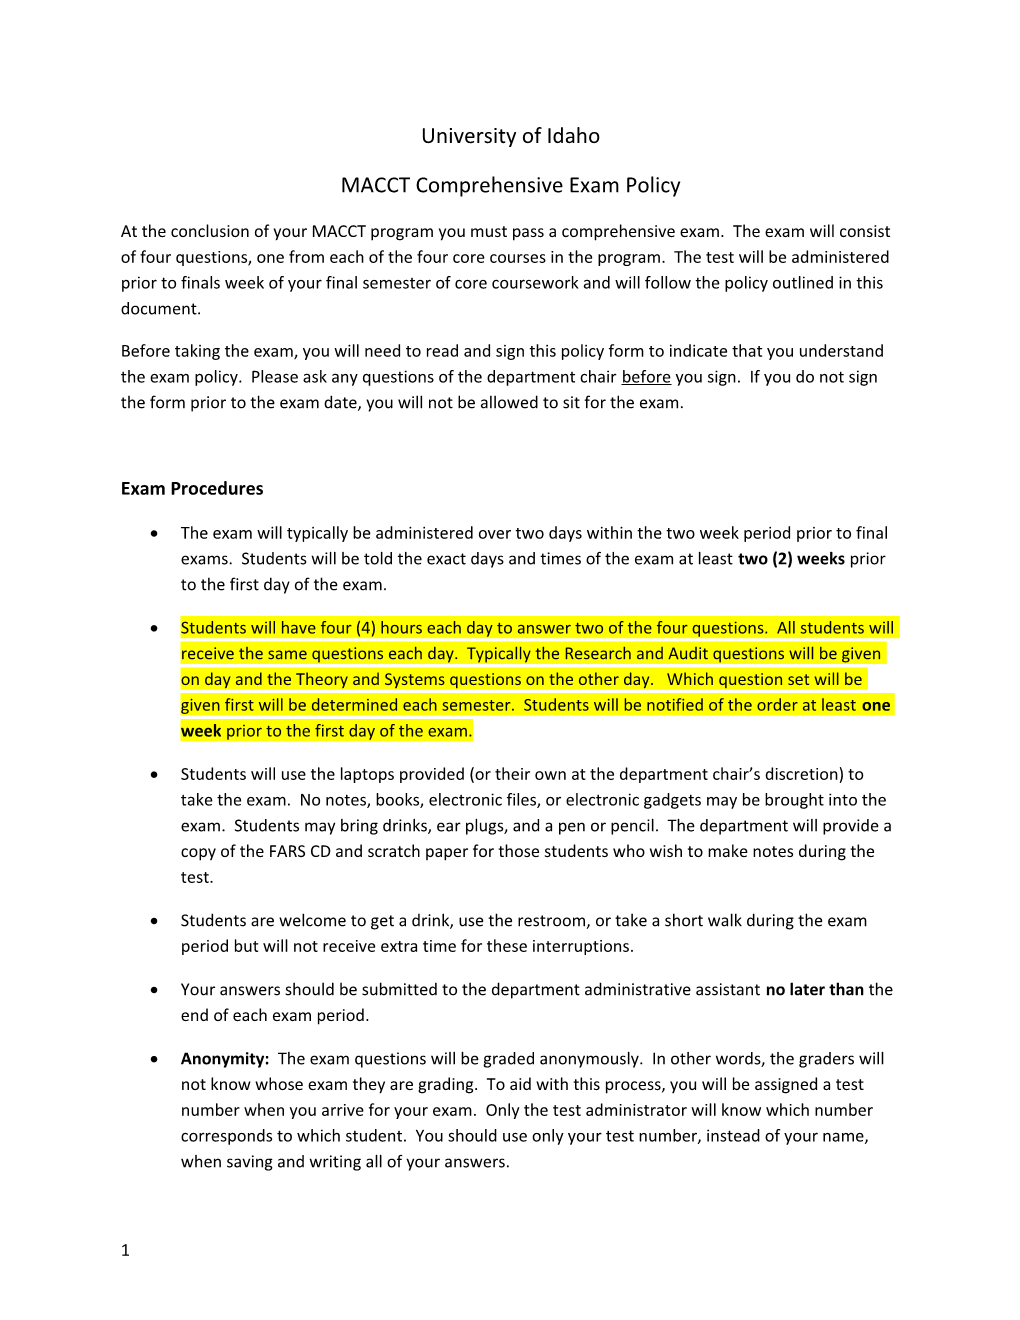 MACCT Comprehensive Exam Policy